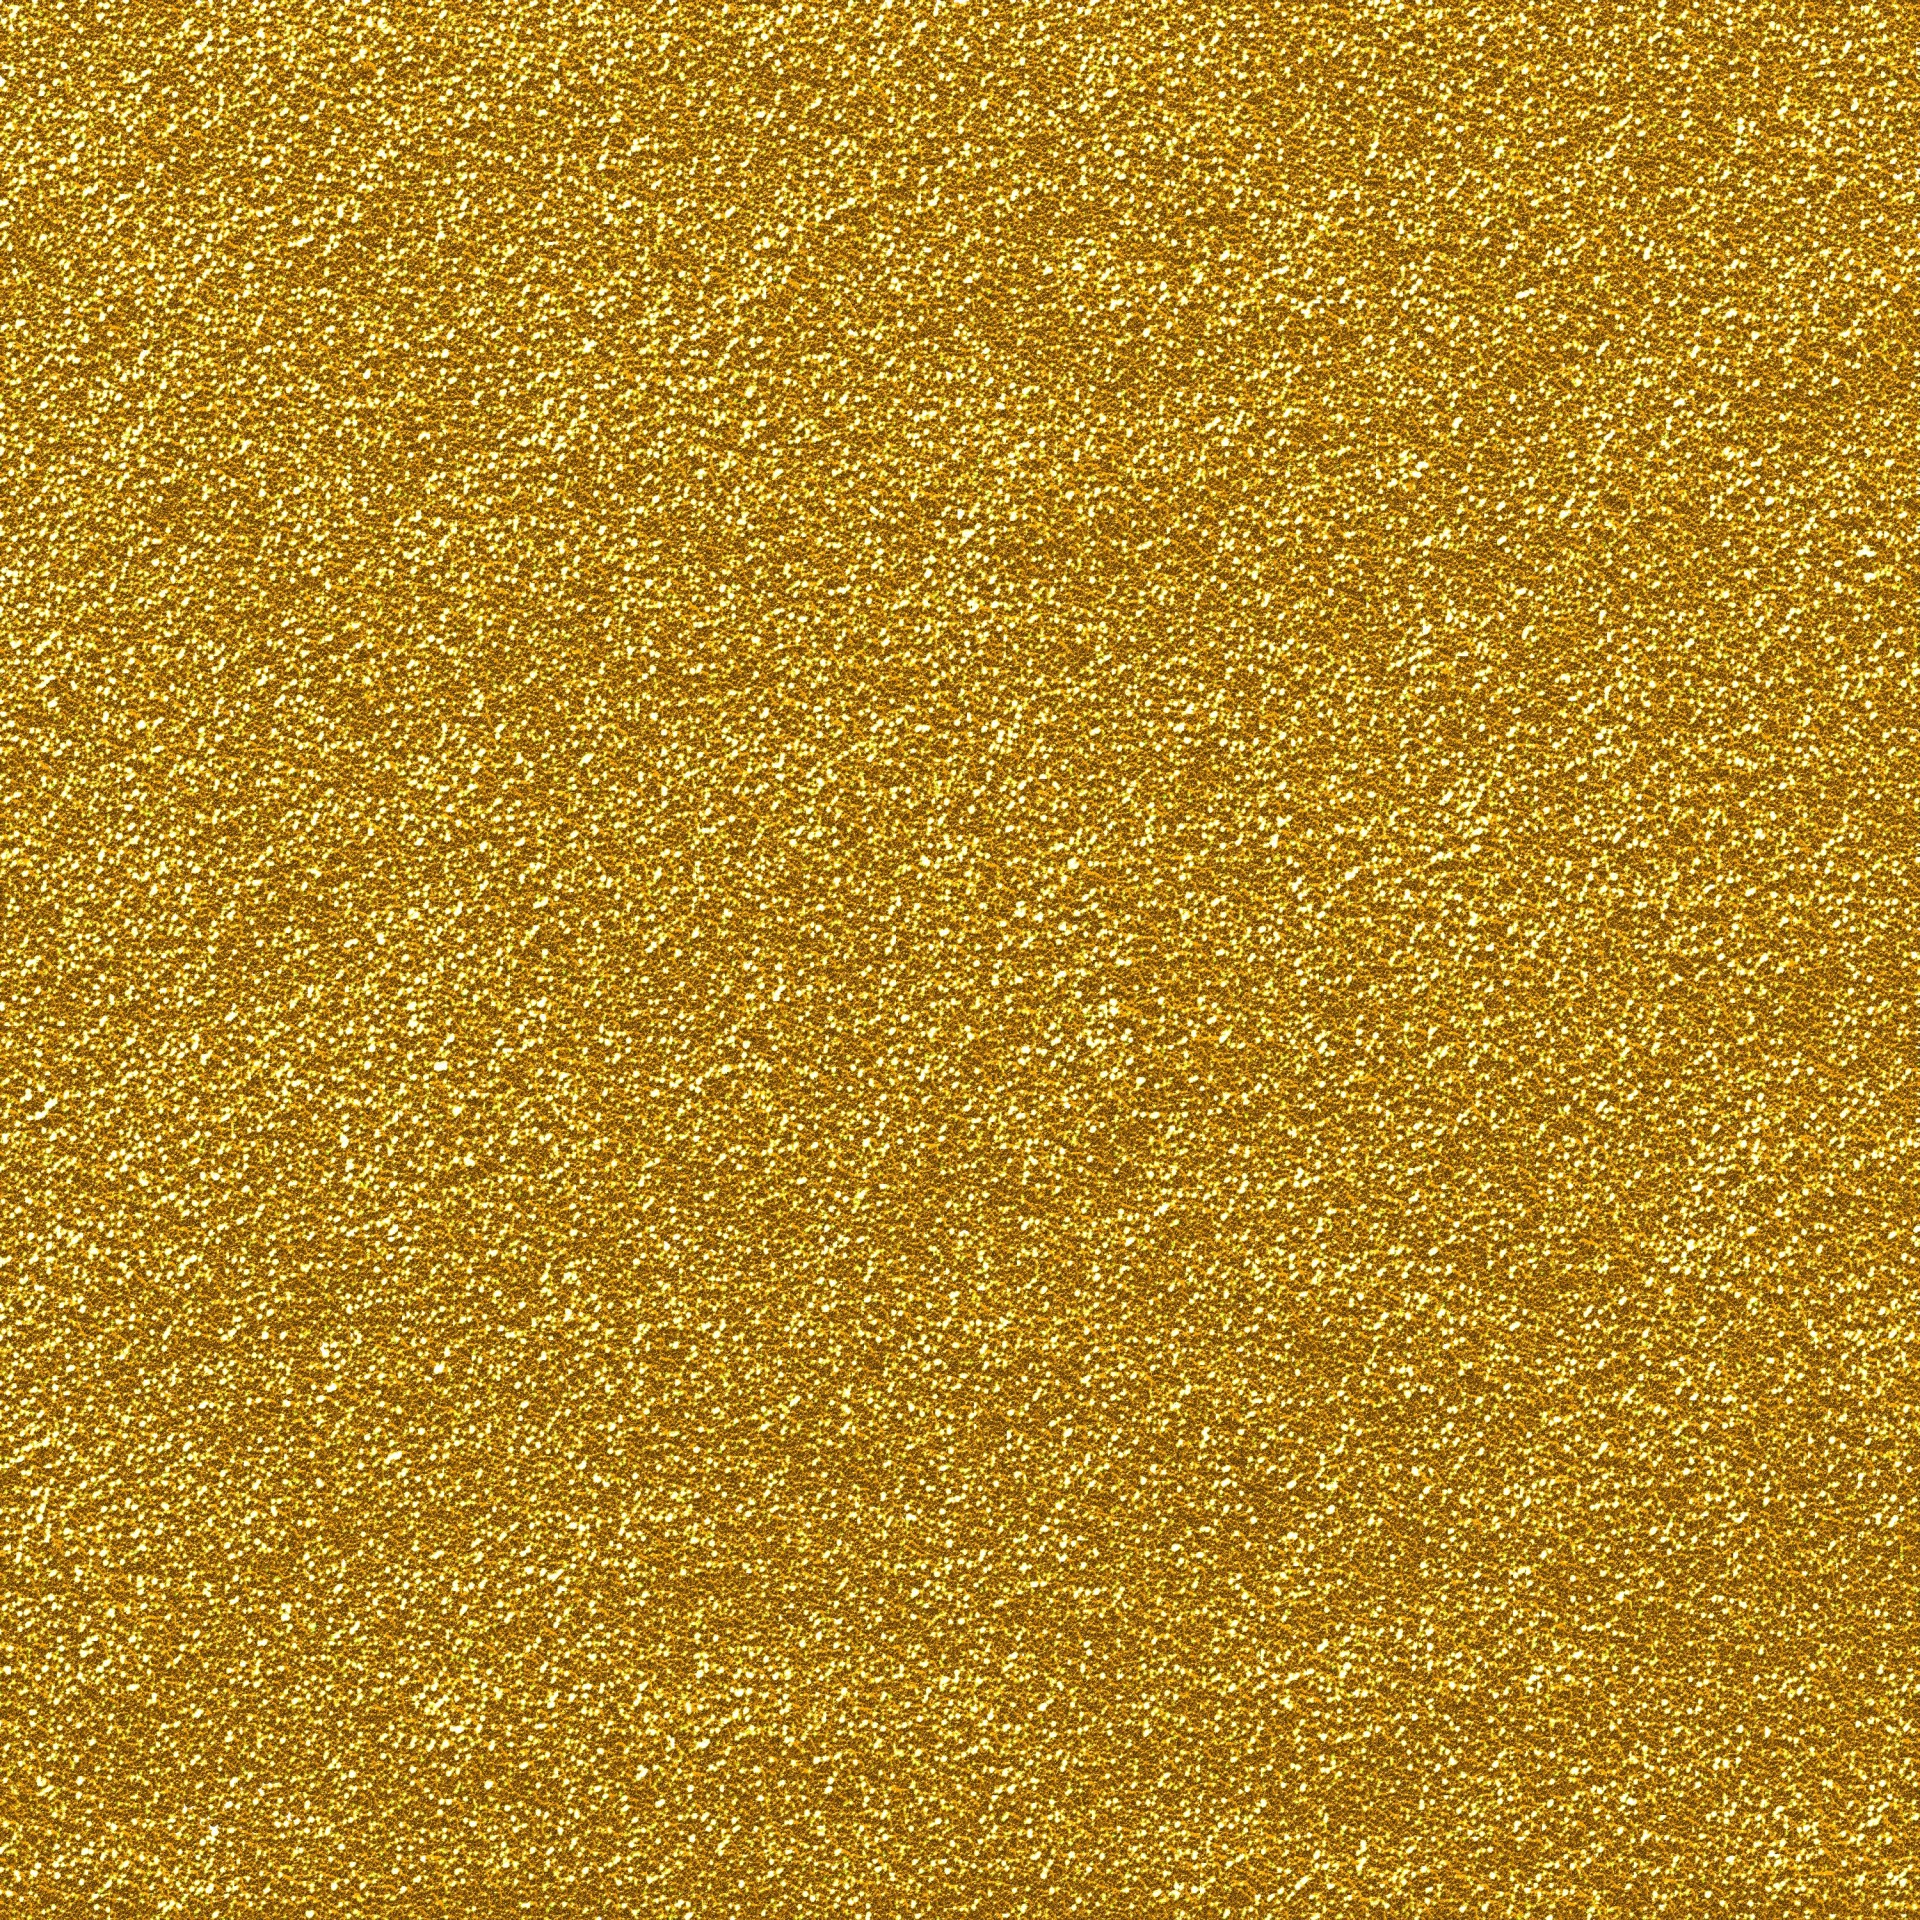 Metallic Gold Glitter Textur Kostenloses Stock Bild - Public Domain Pictures